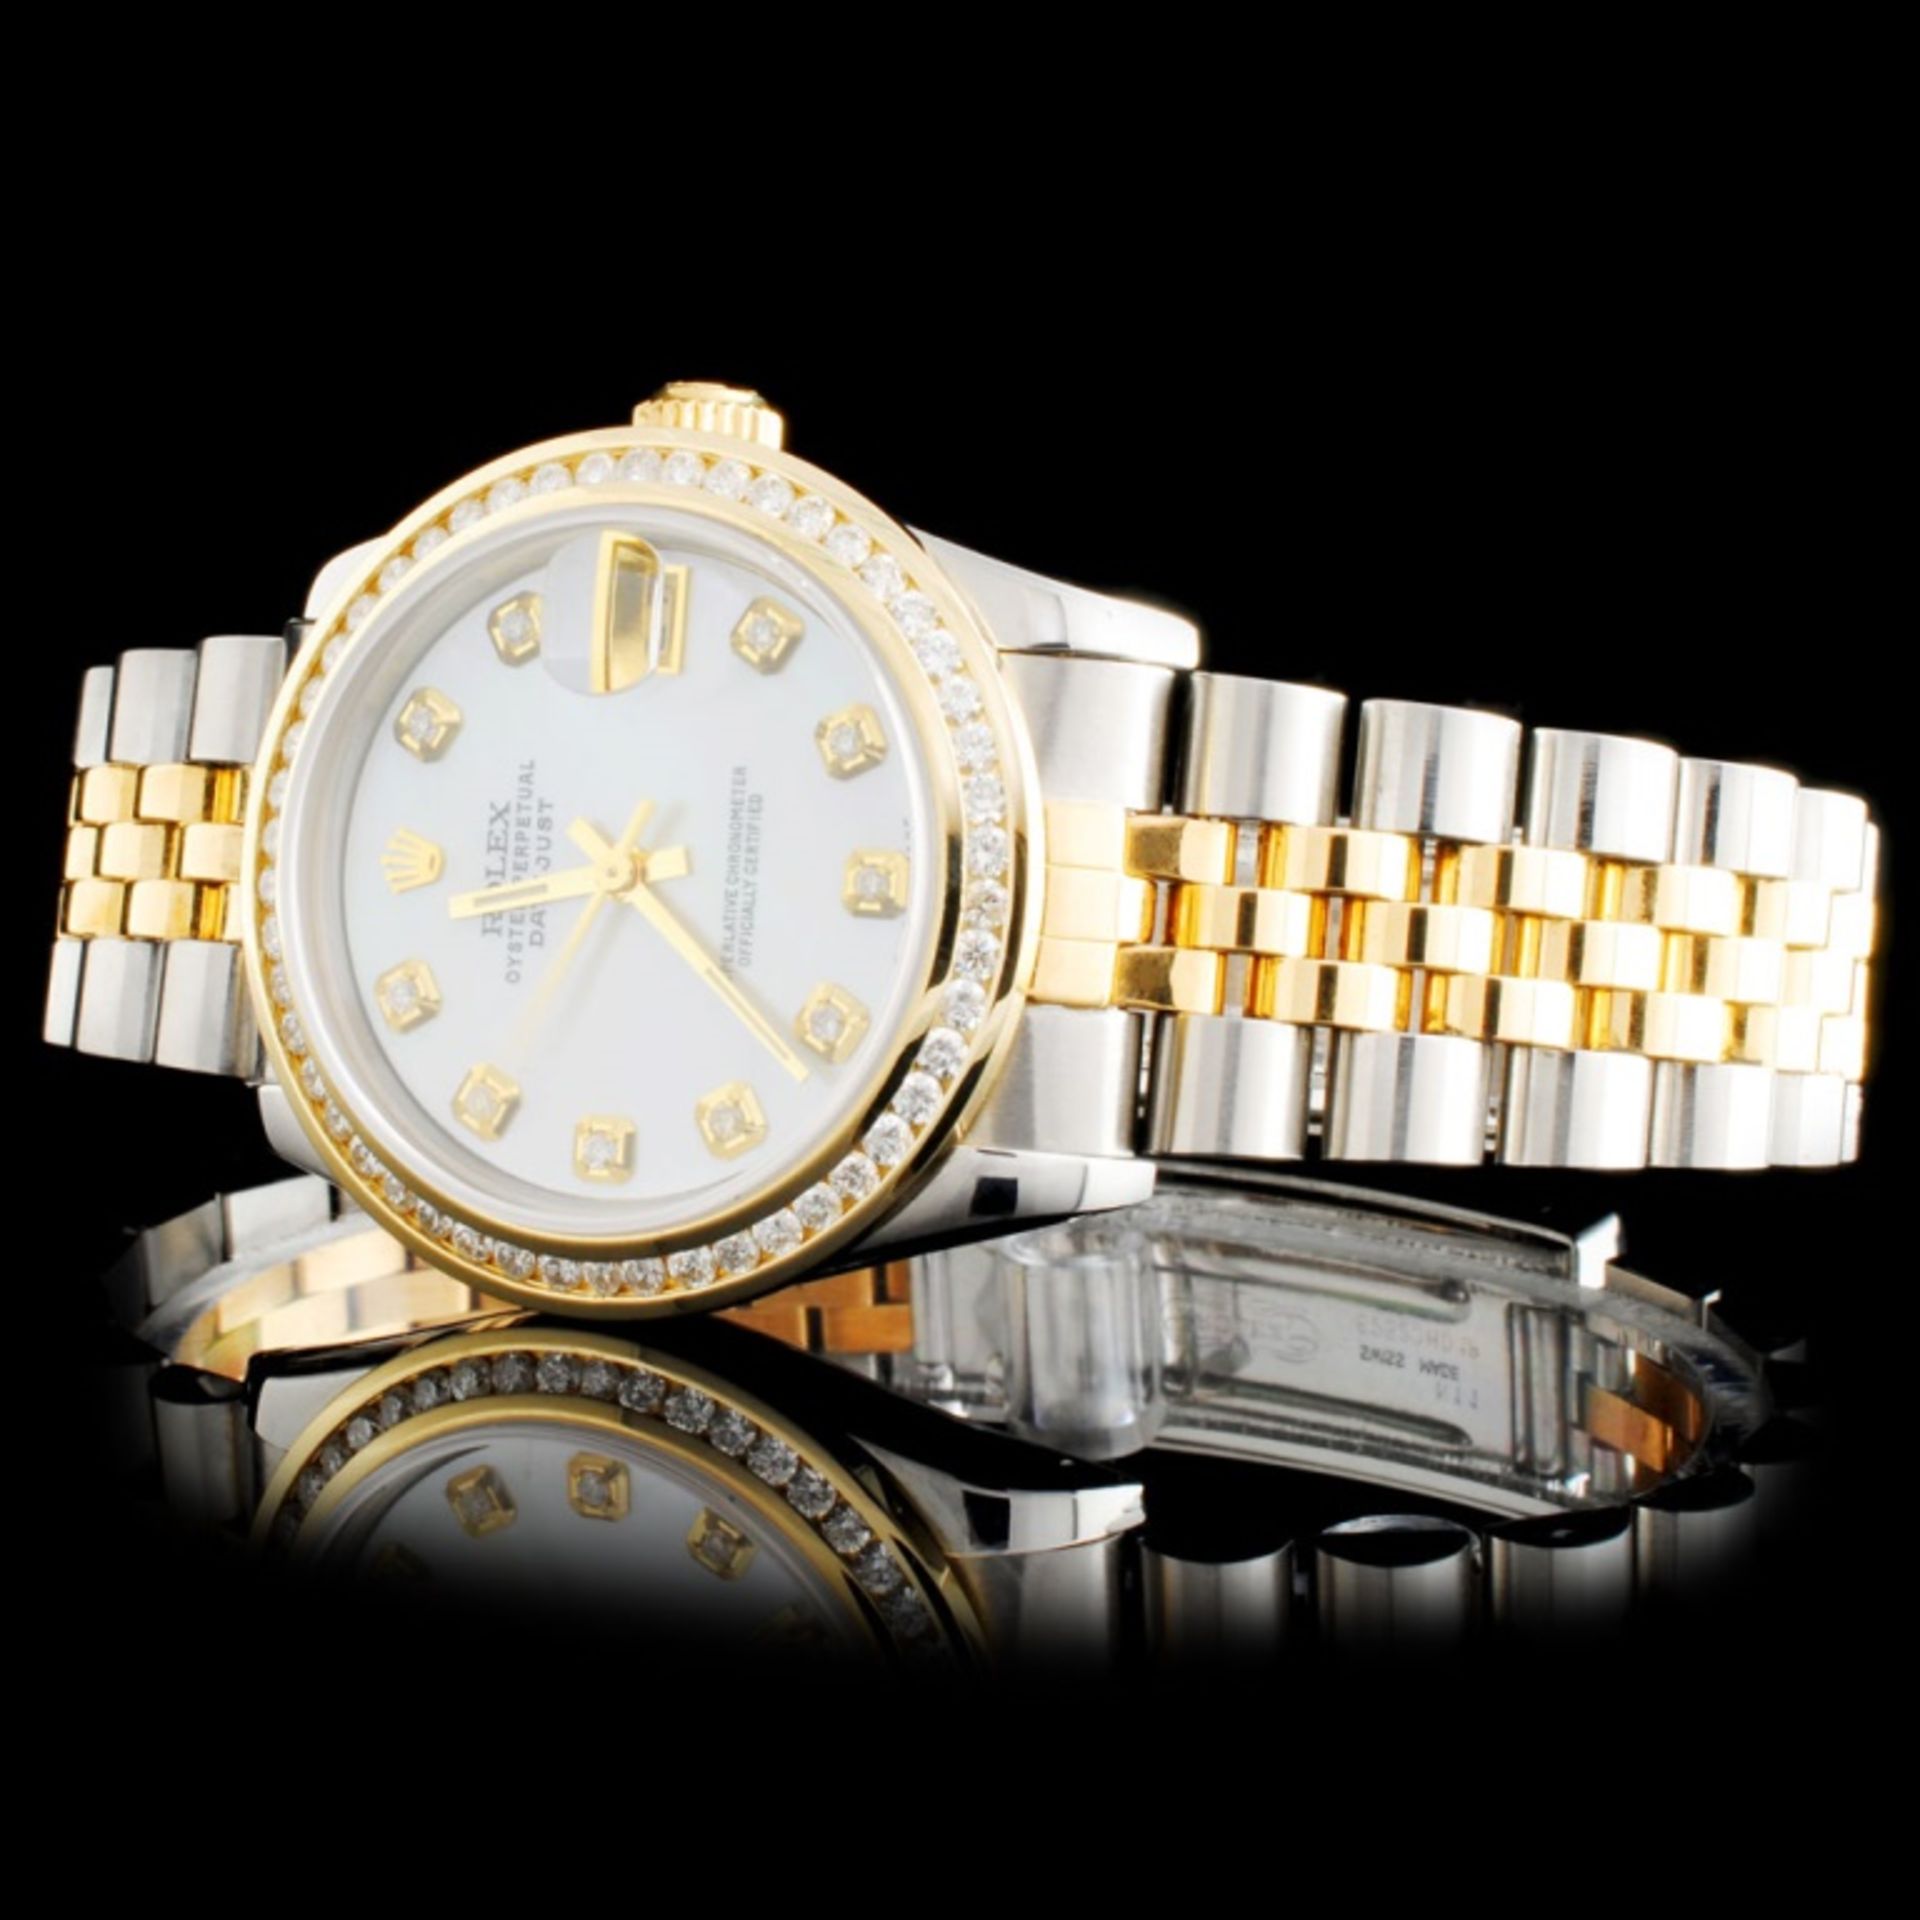 Rolex 31mm DateJust 1.00ct Diamond Watch - Image 2 of 4